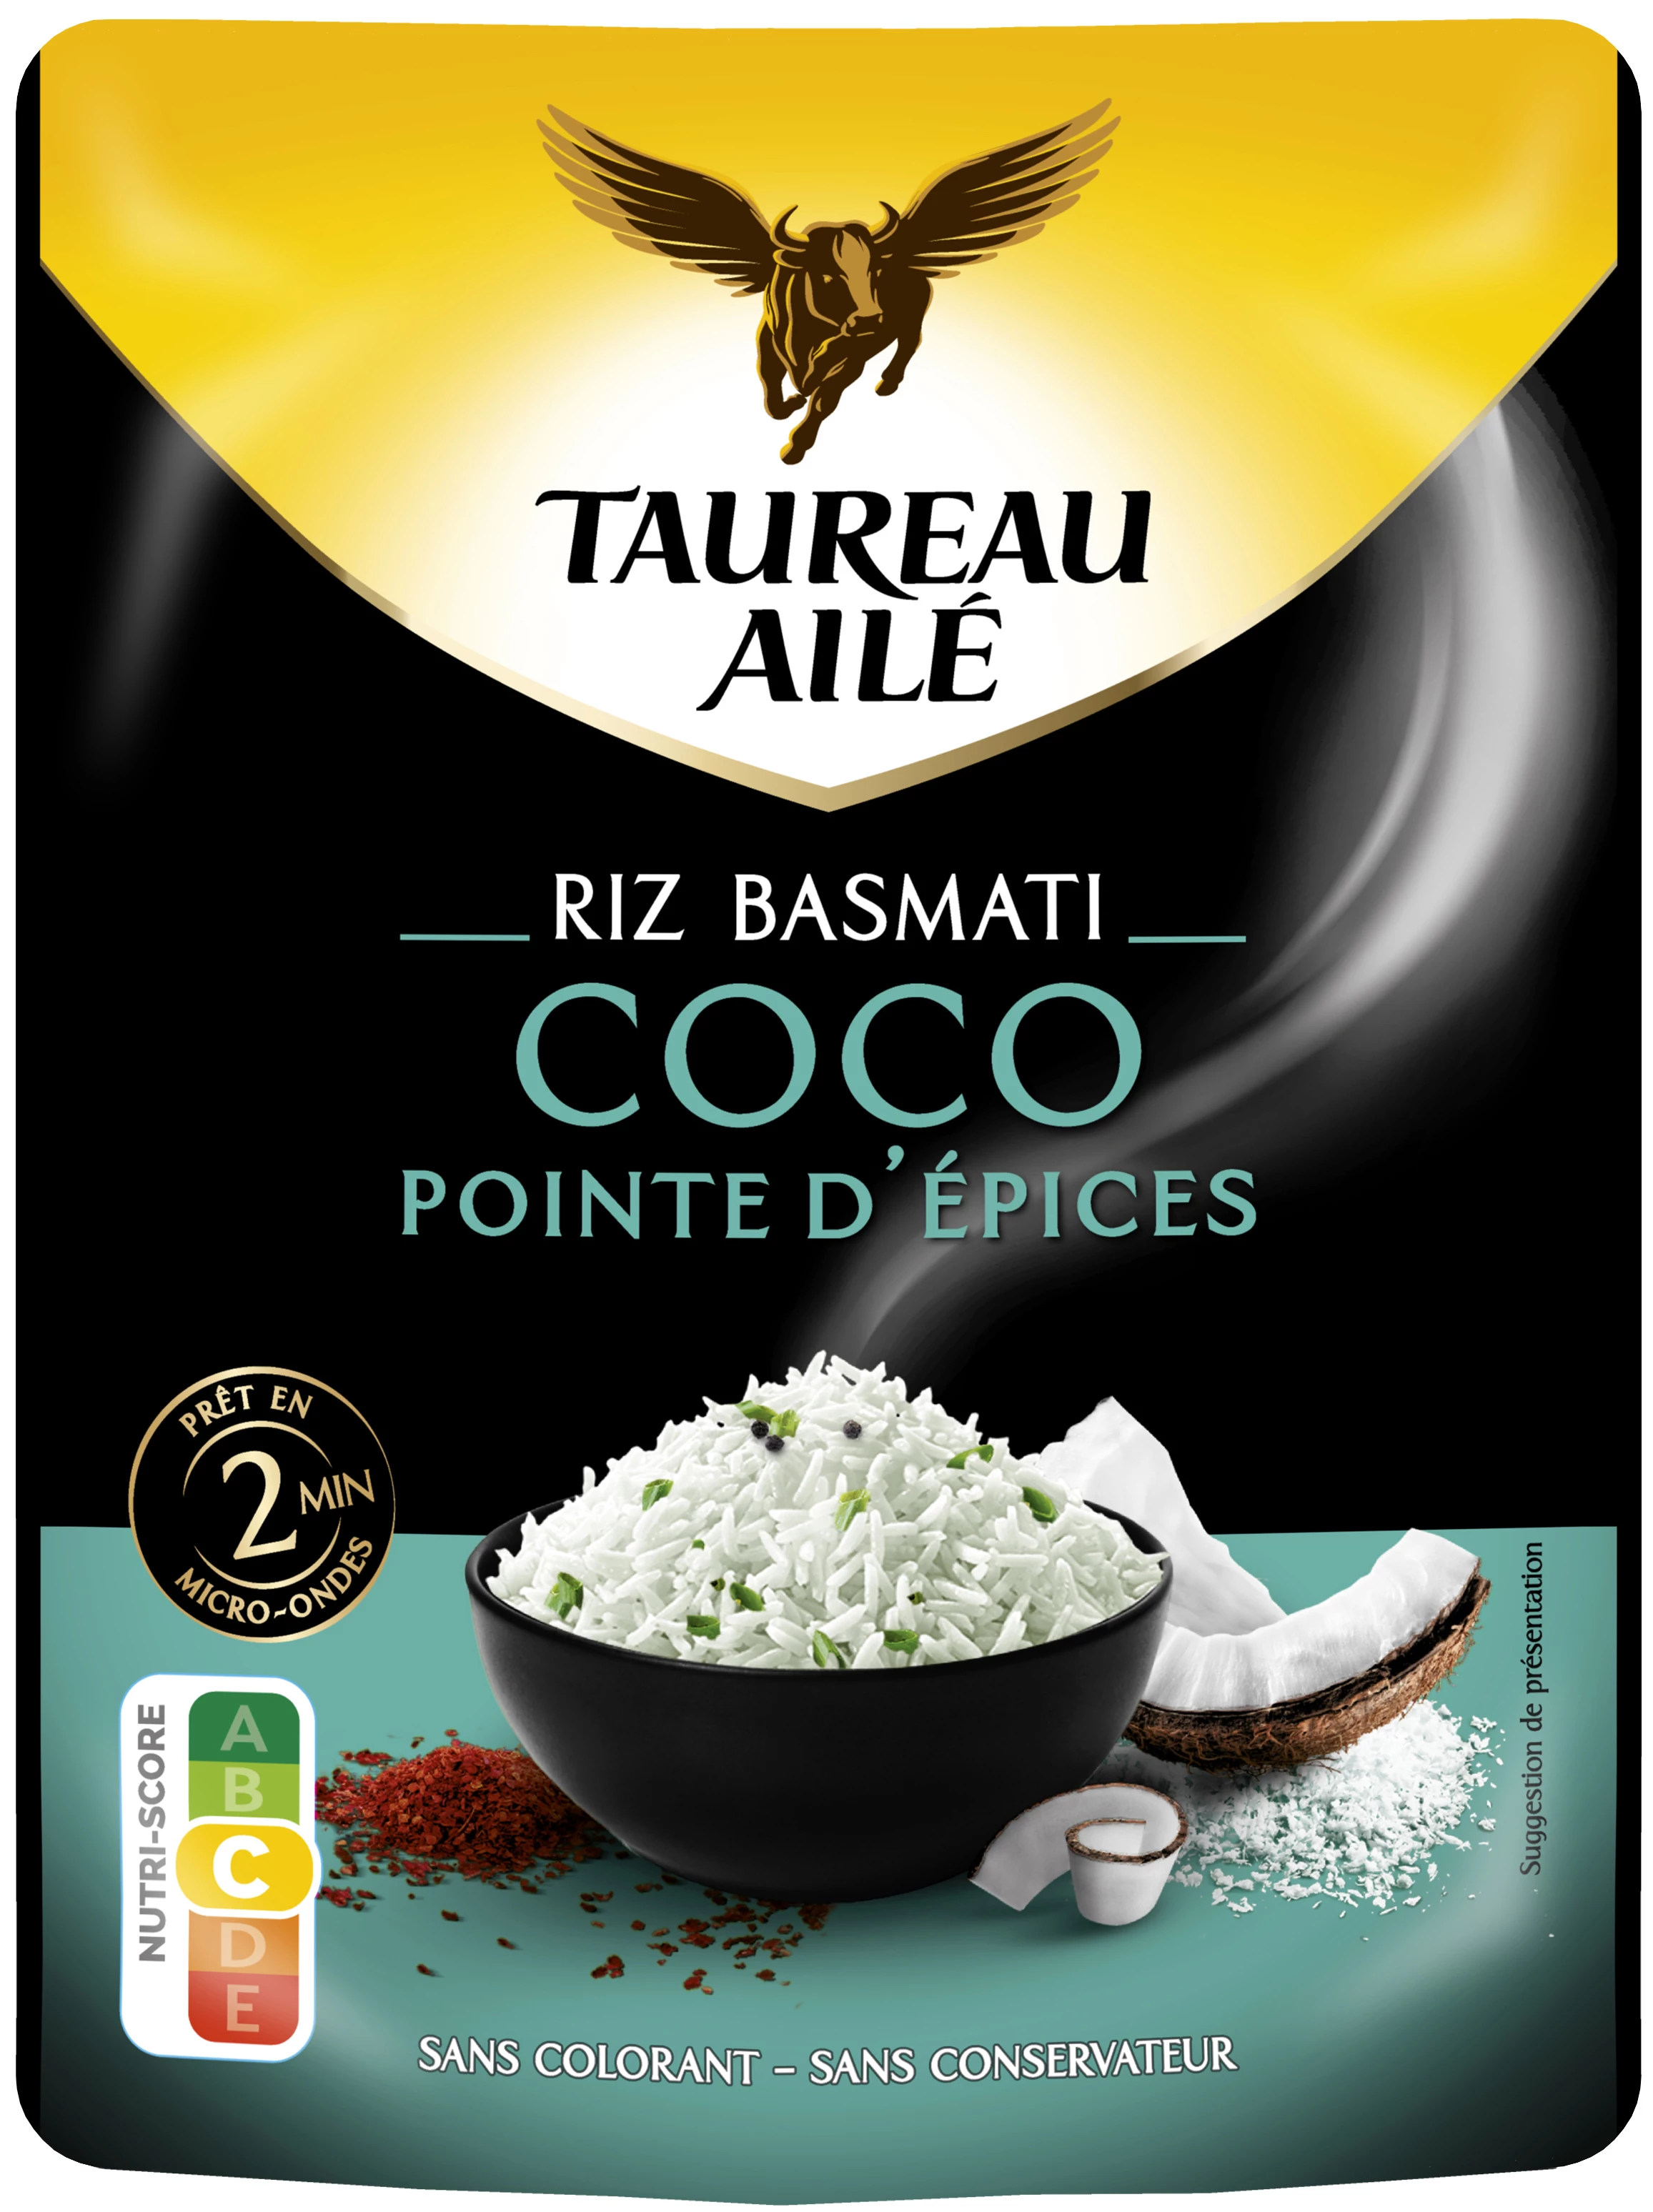 Riz Basmati Cocco, 250g - TAUREAU AILÉ